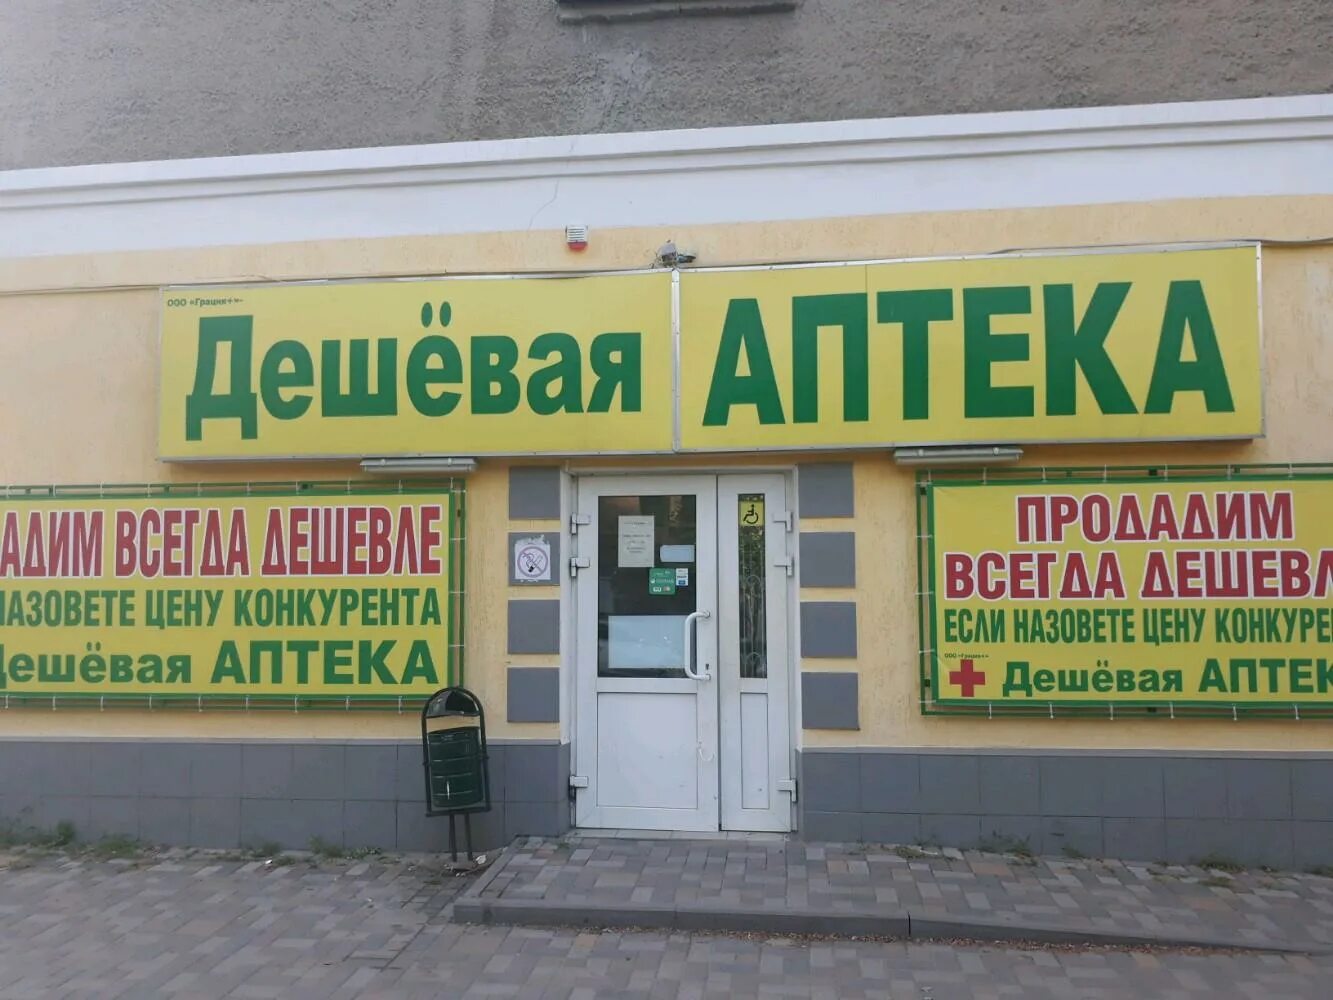 Дешевая аптека. Аптека дешевая аптека. Самая дешевая аптека. Дешевые аптеки в Москве.